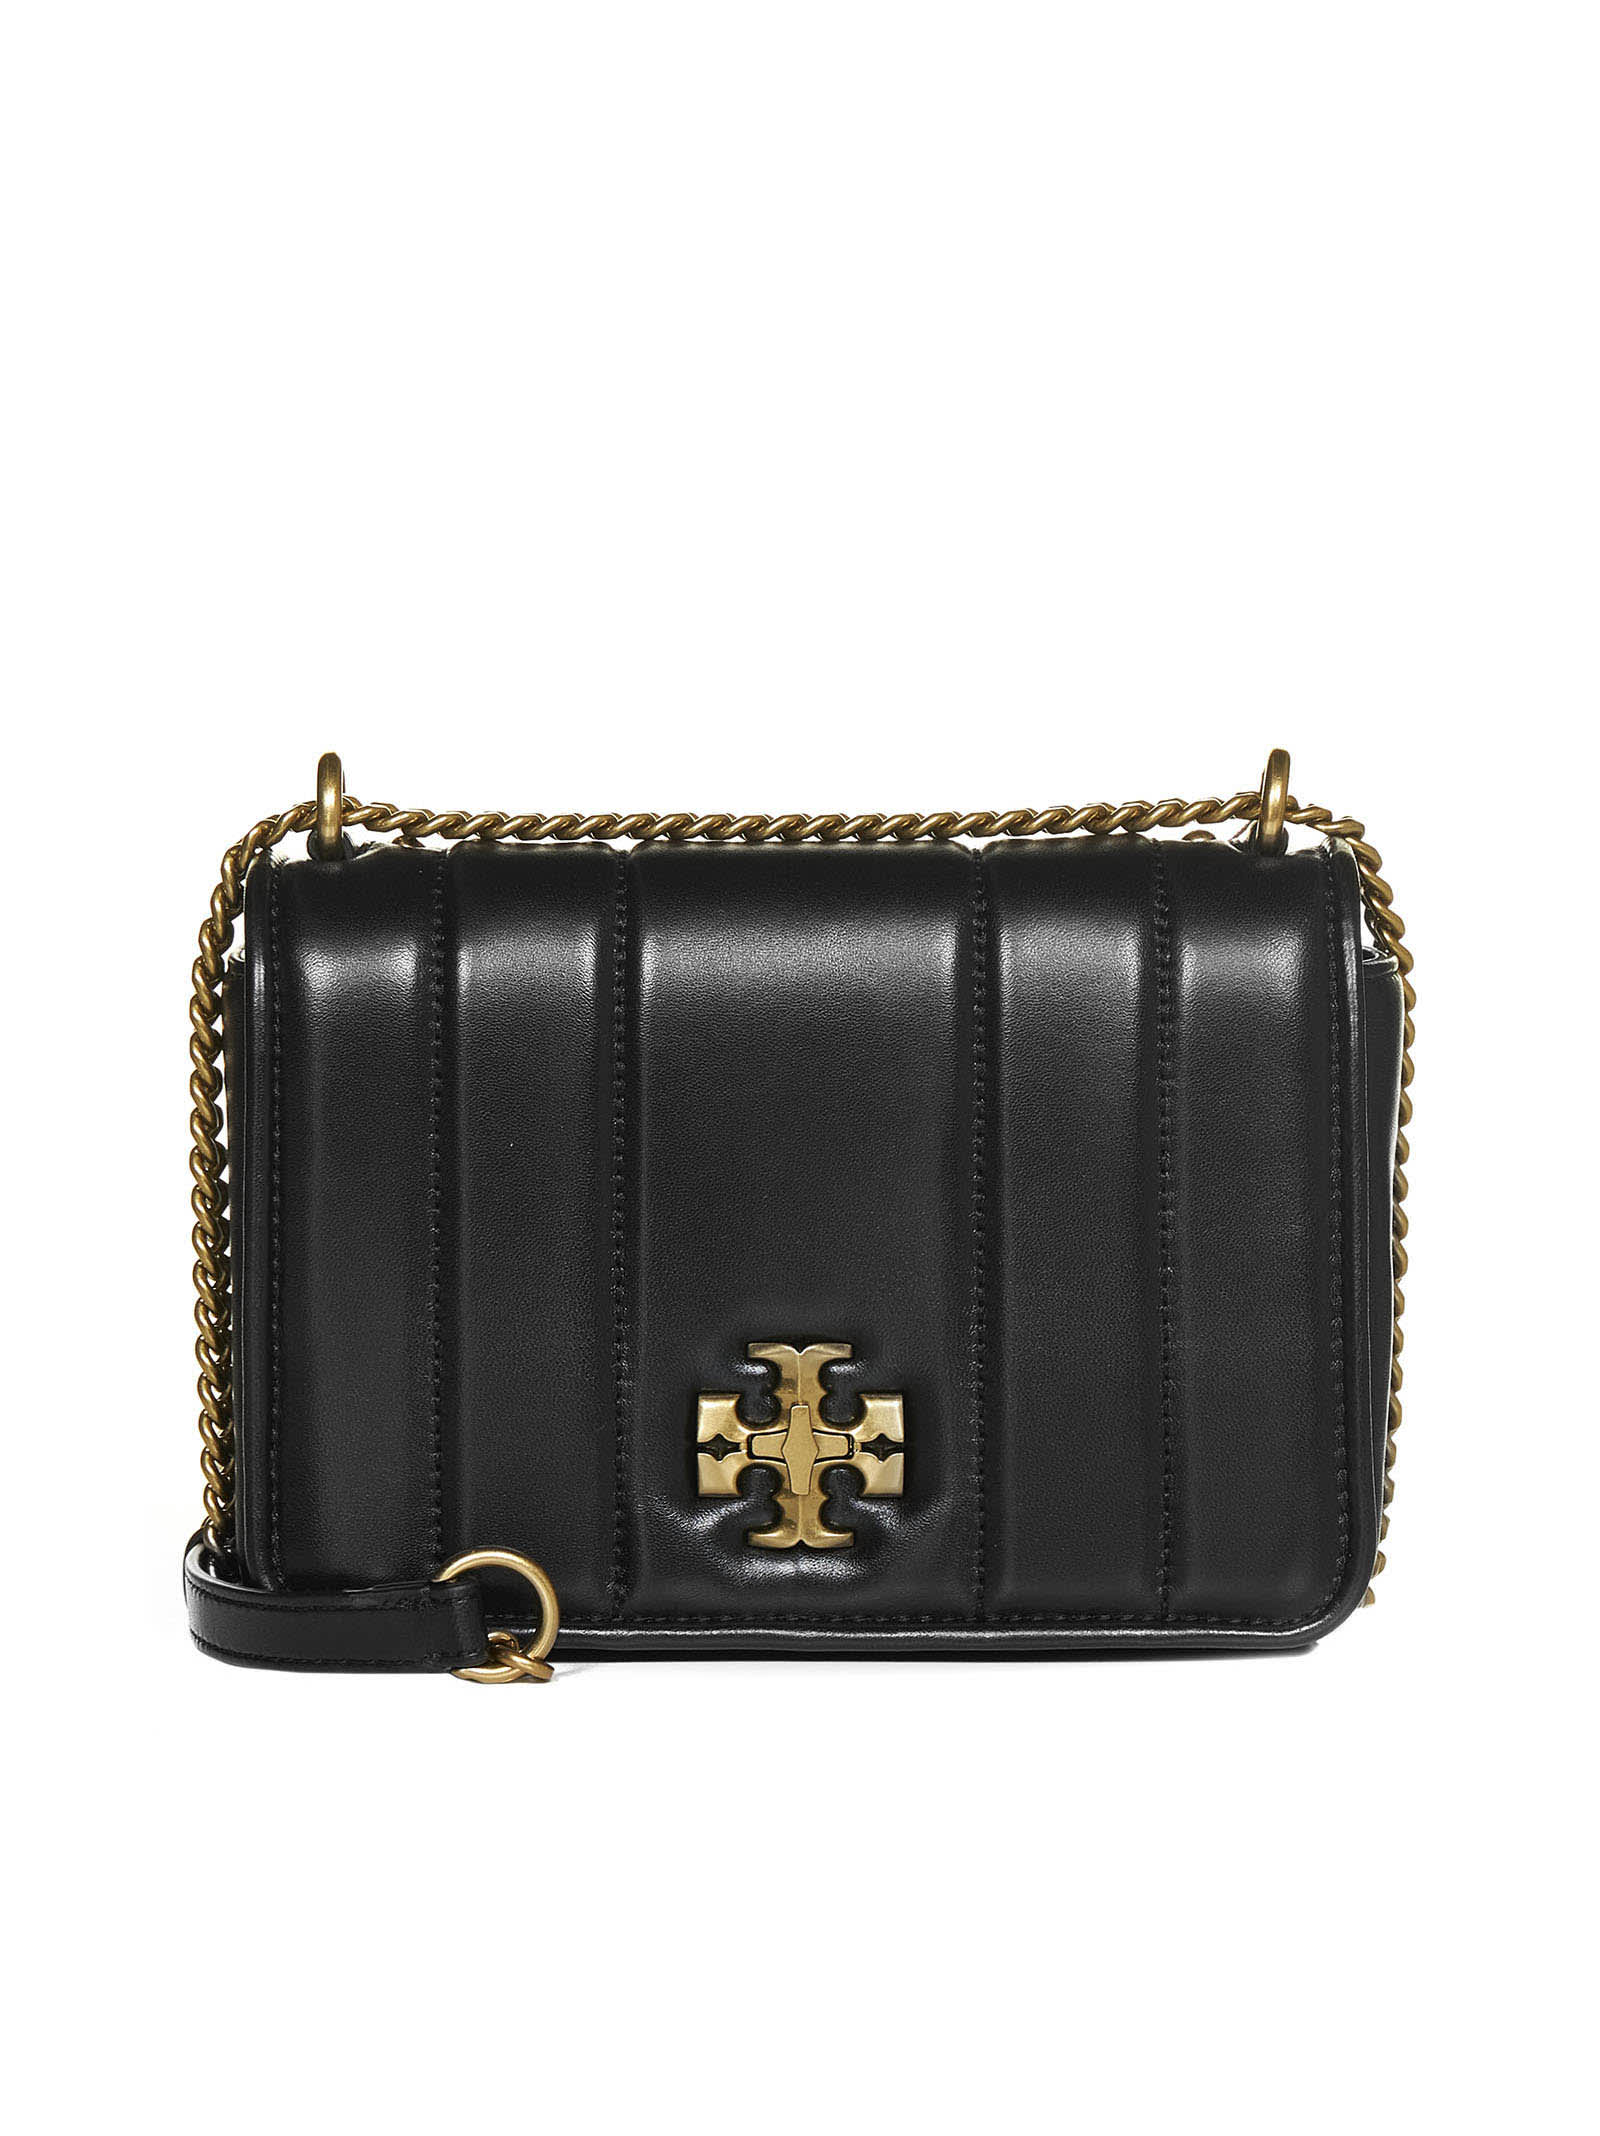 Tory Burch Shoulder Bag In Black Rolled Gold | ModeSens